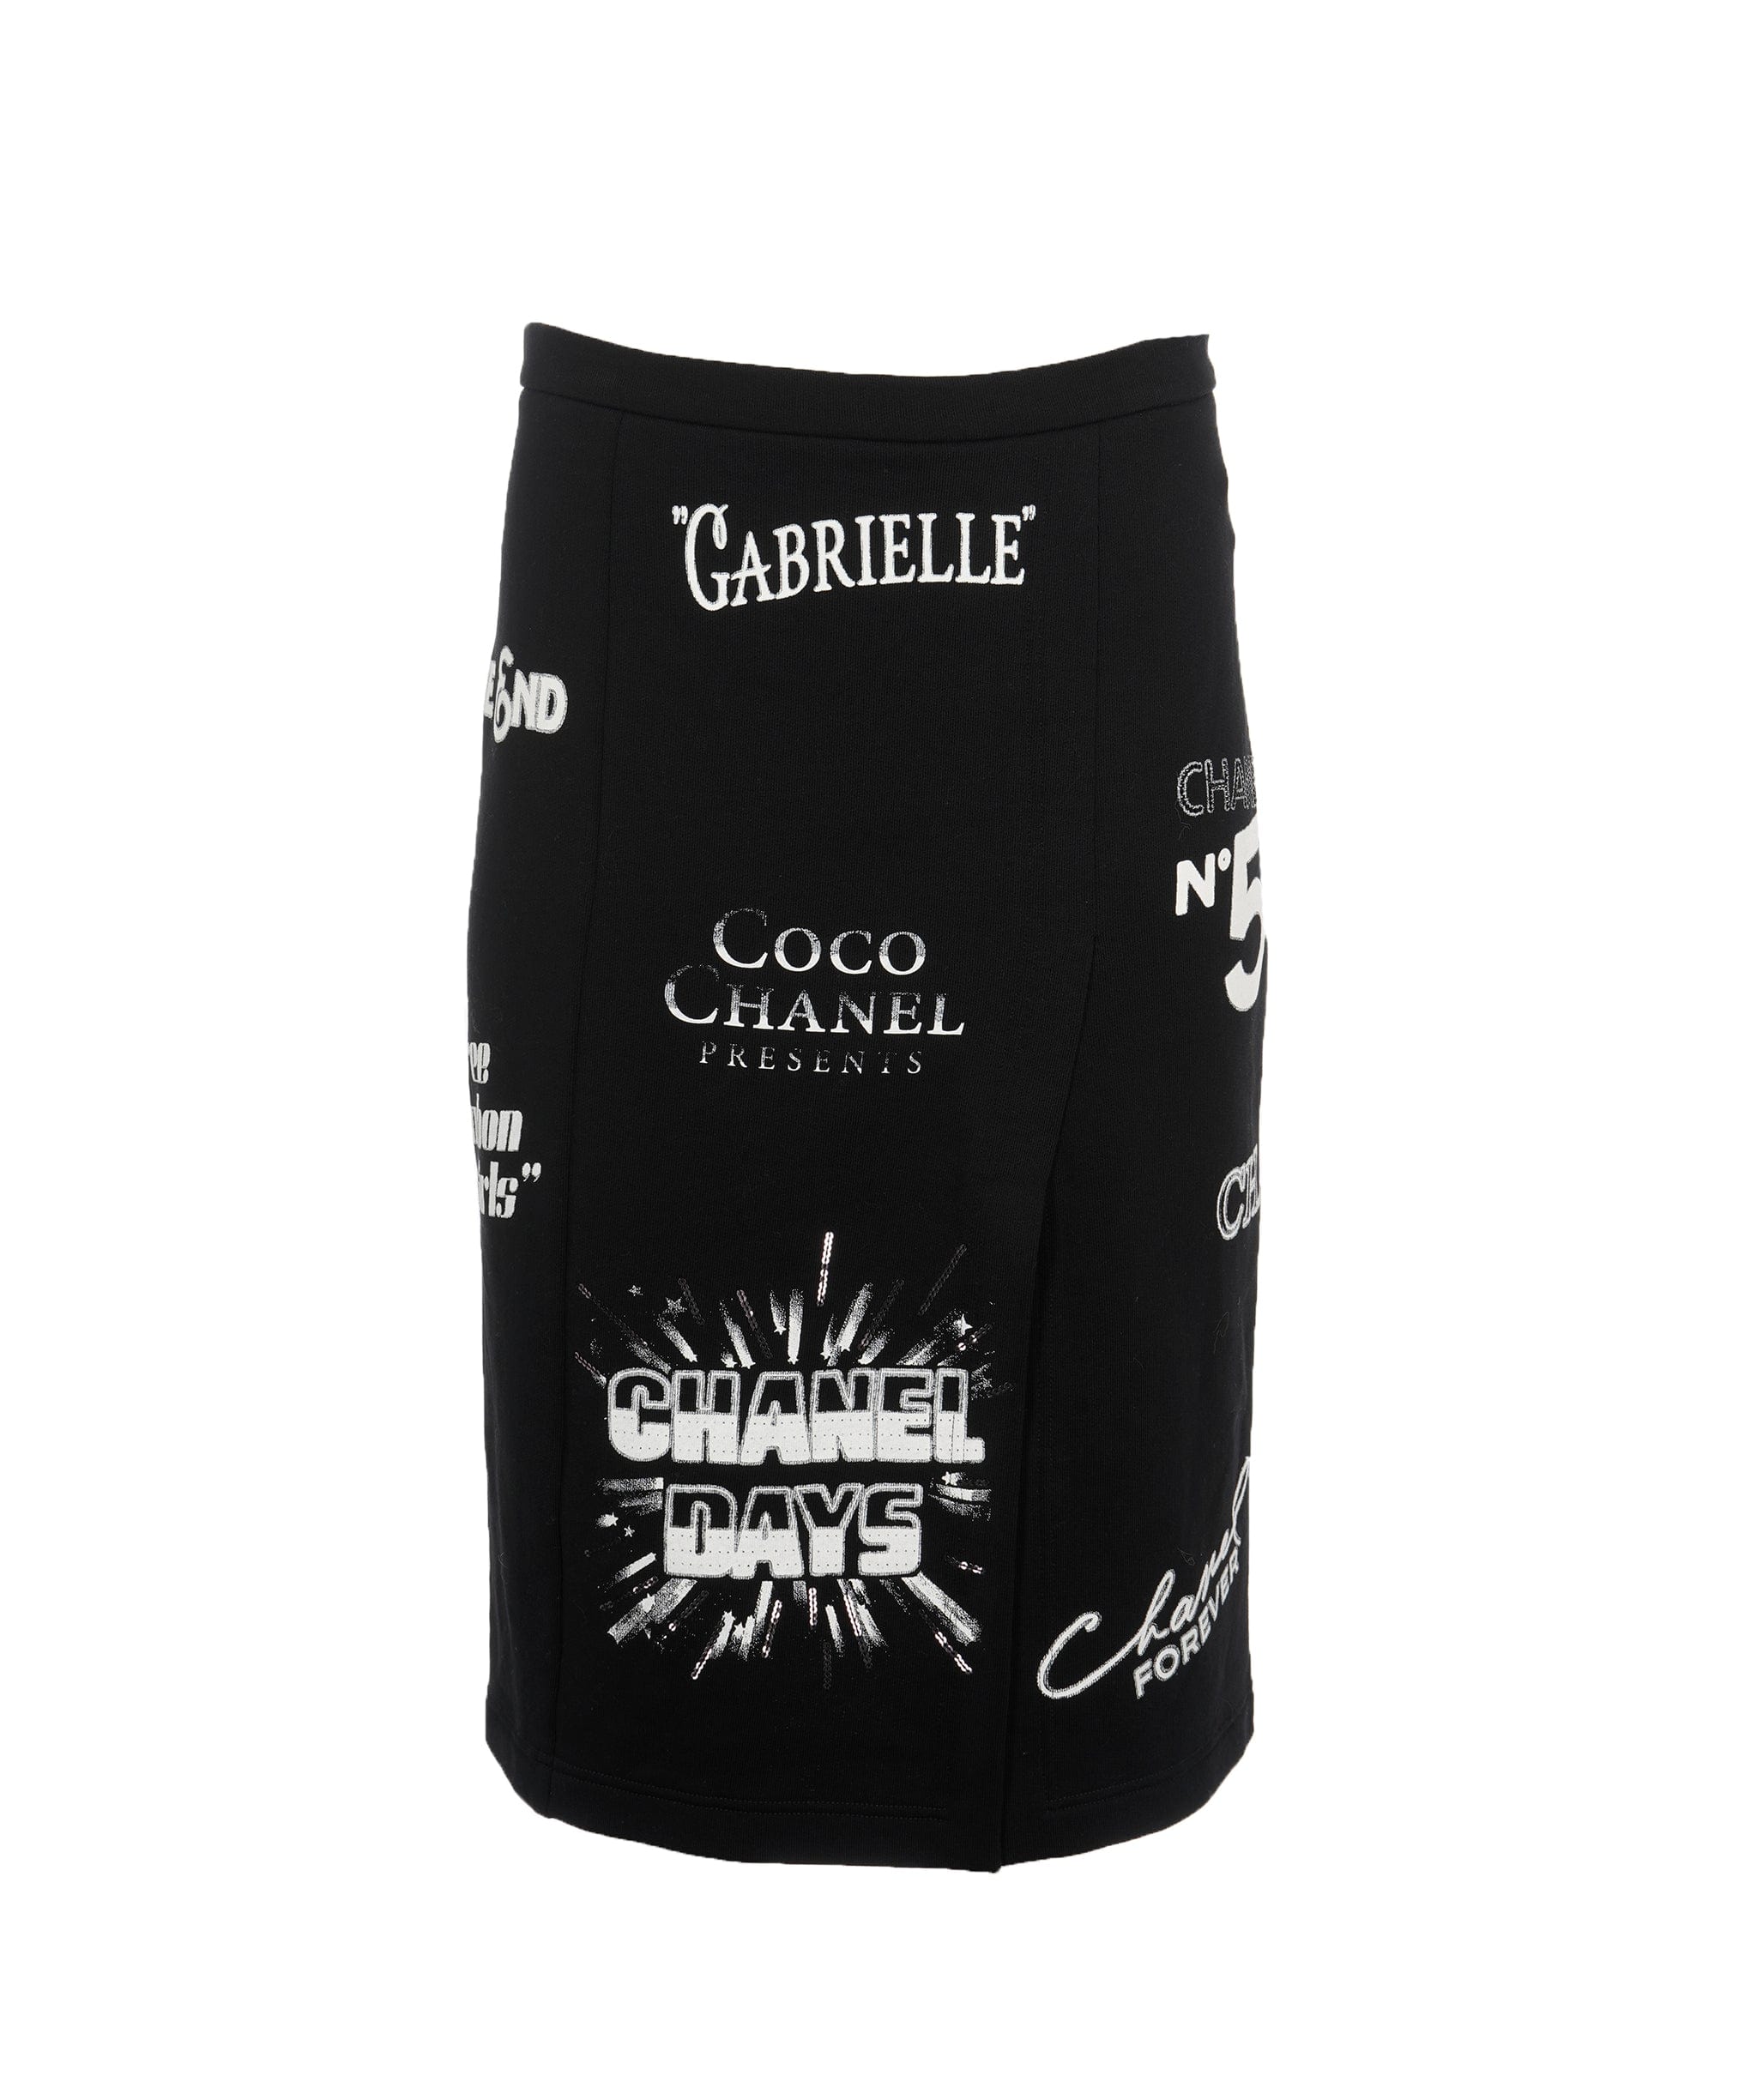 Chanel Jupe Chanel Chanel days noire FR40 P70693V62077 ALC1222